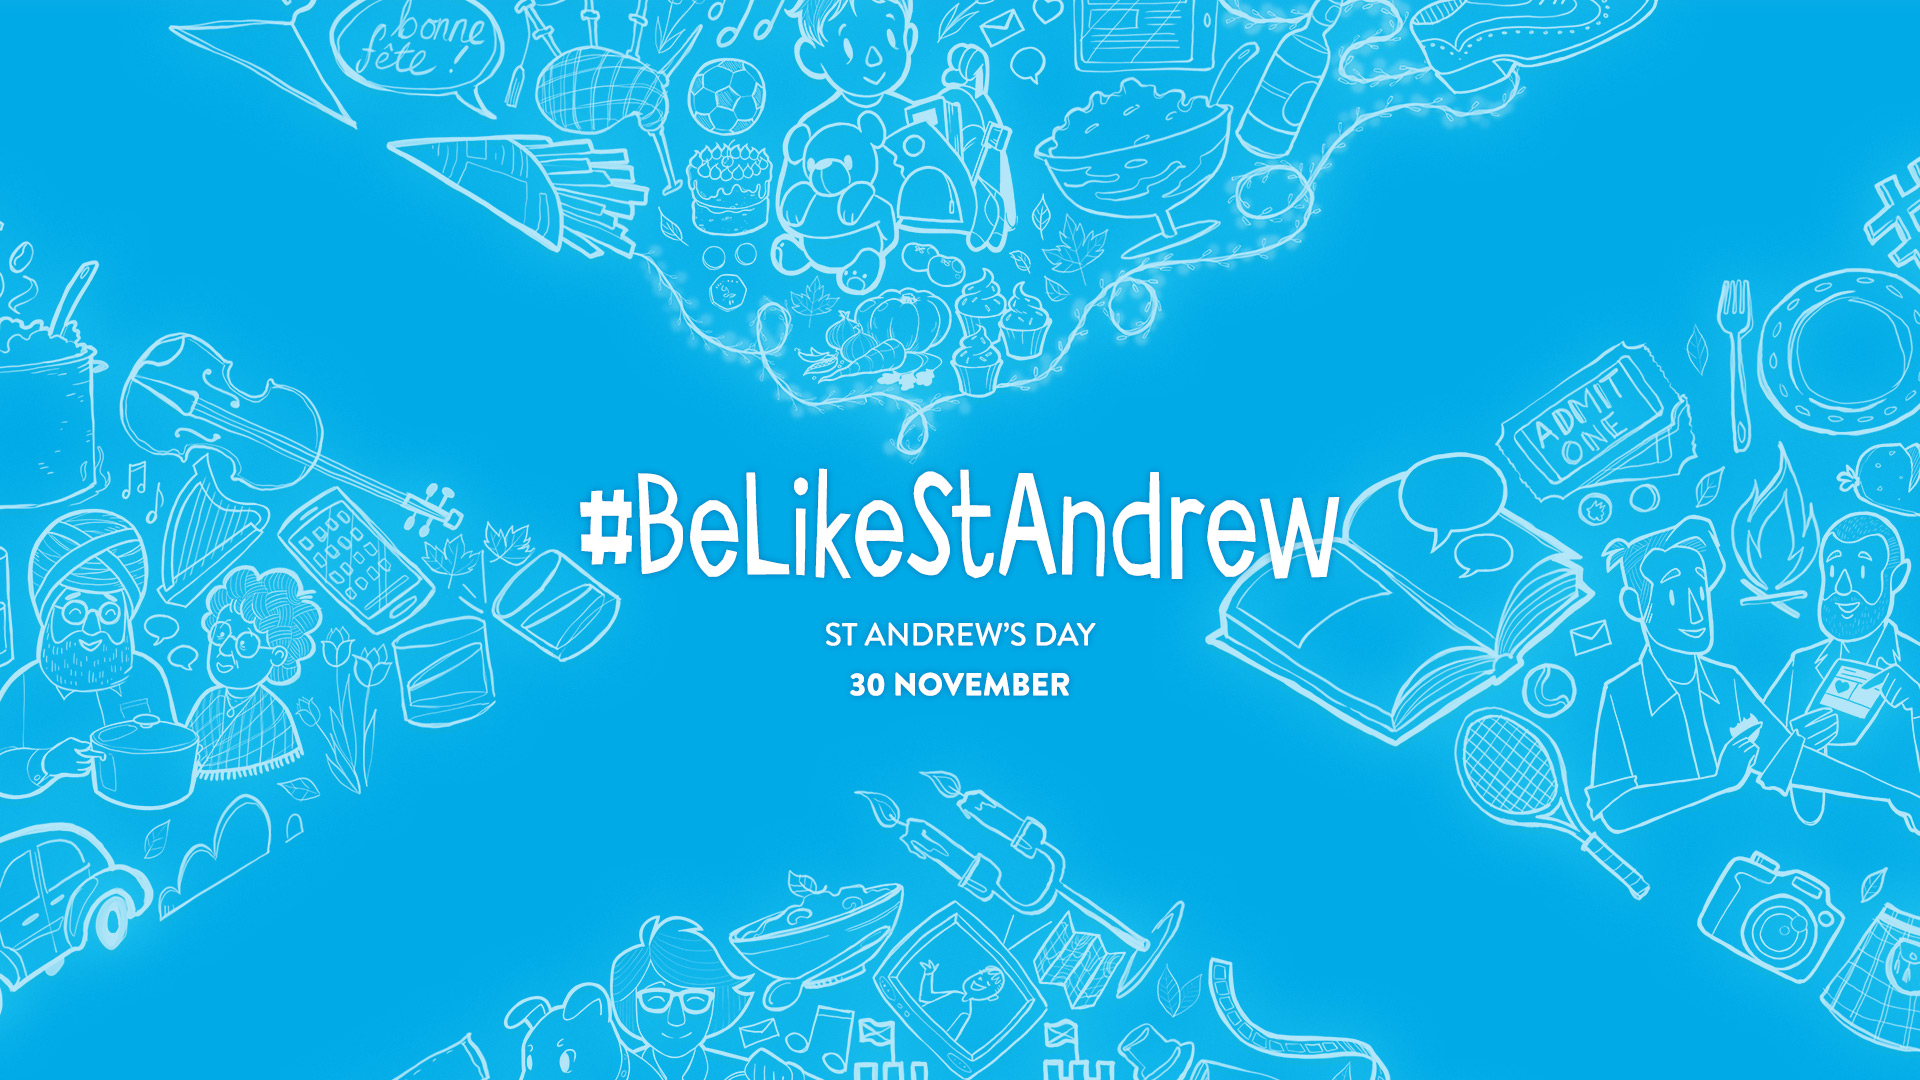 Text on image says:" #BeLikeStAndrew 30 November"